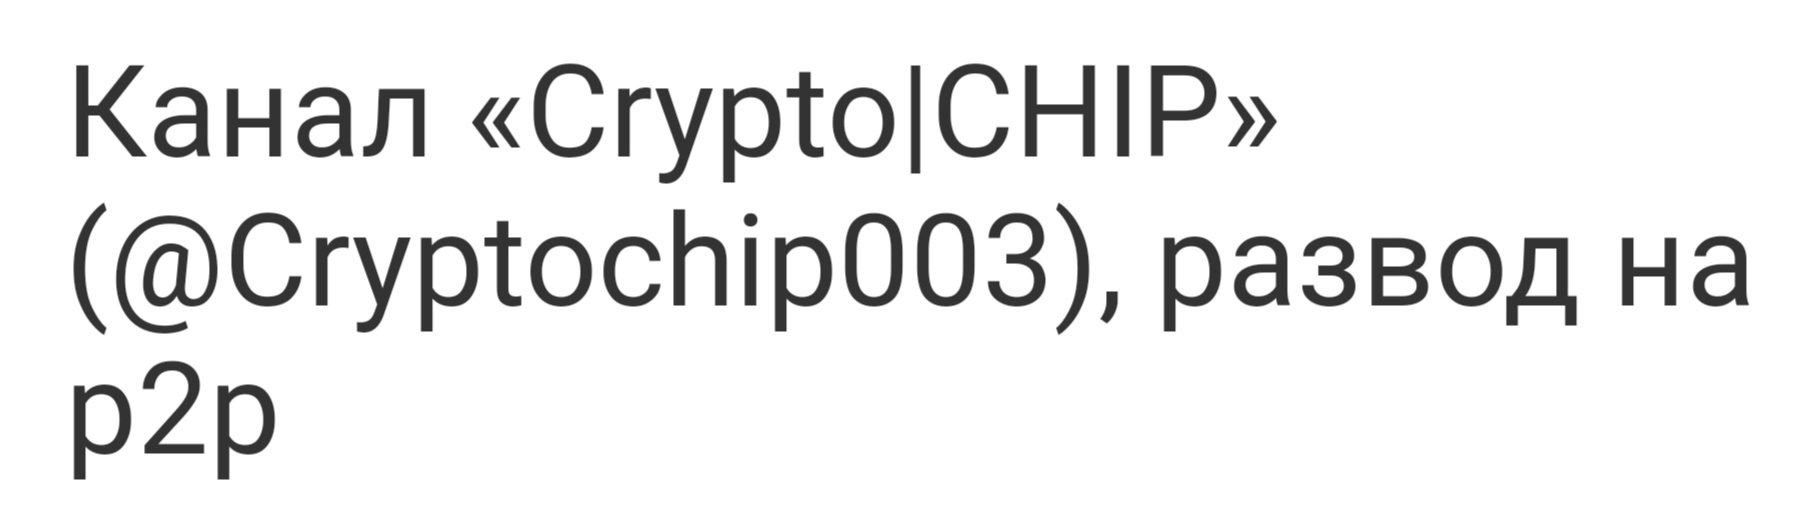 Crypto Chip отзывы